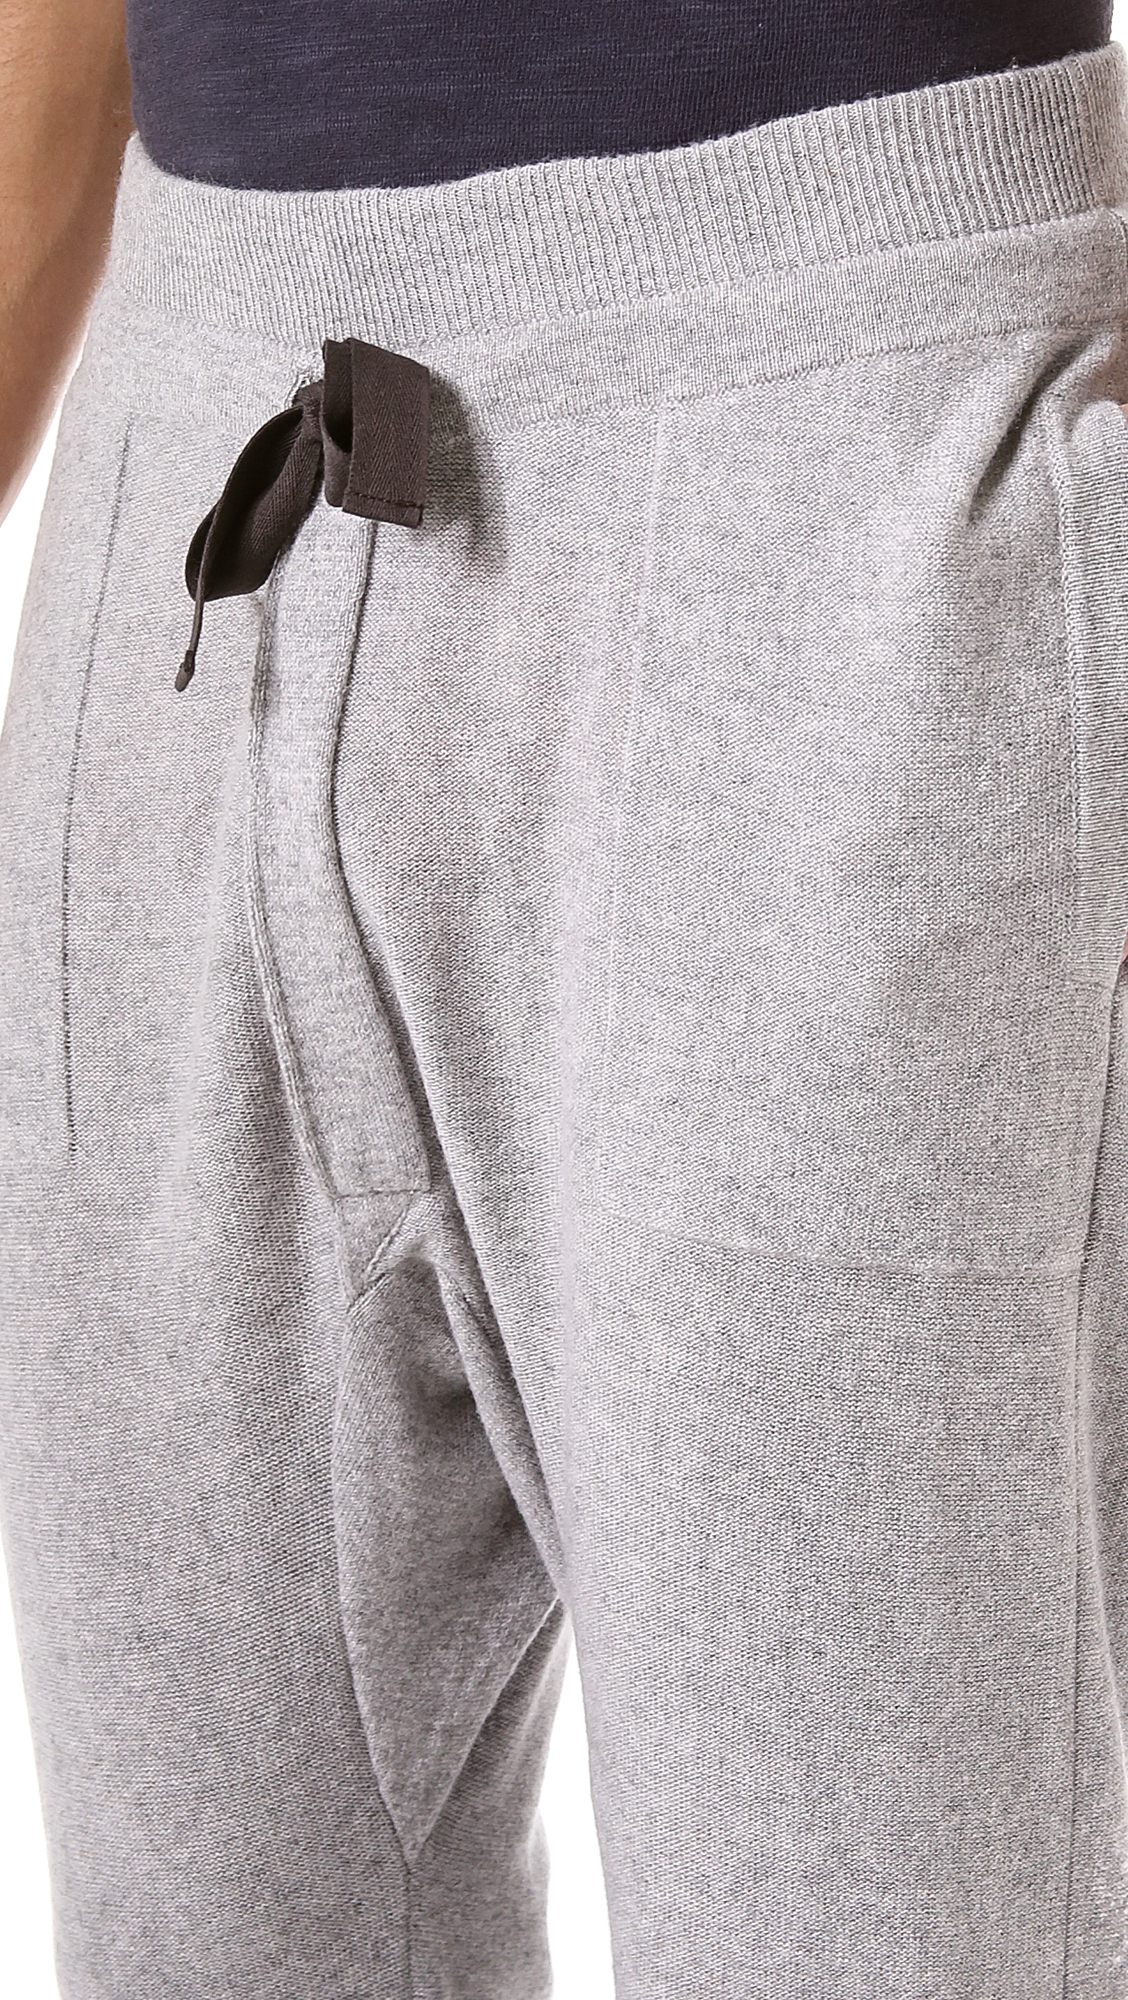 Lyst - Inhabit Cashmere Sweatpants in Gray for Men